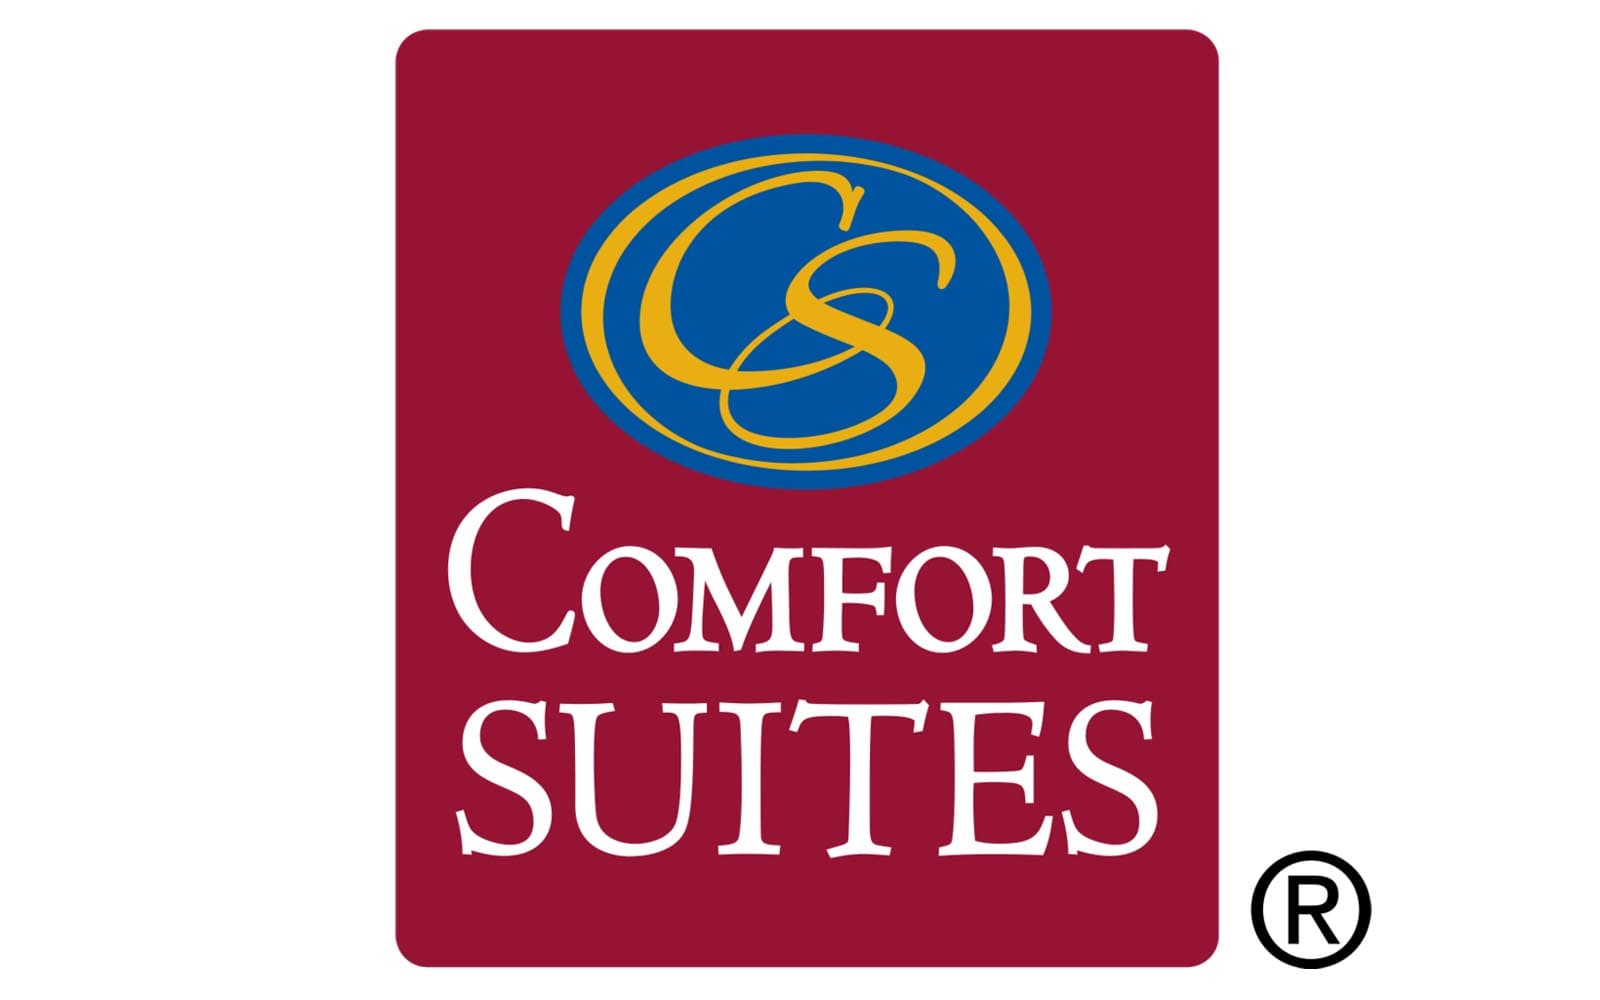 Comfort Suites Houston Bush Airport (IAH)